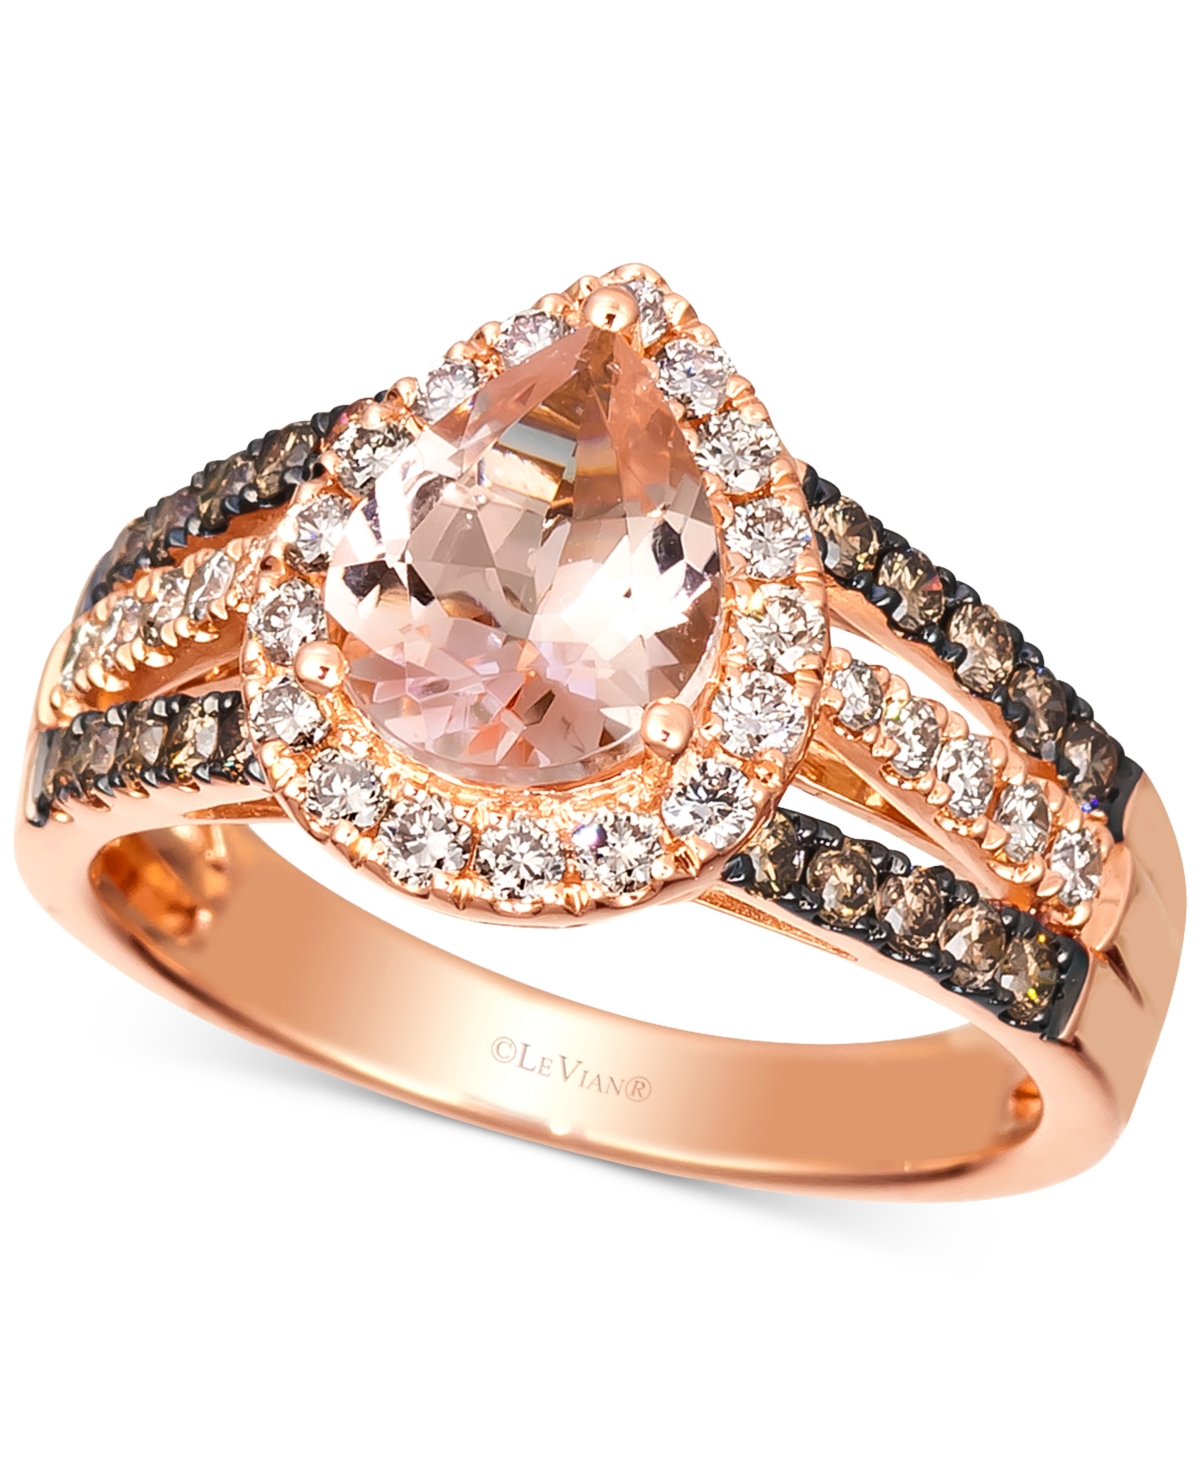 Macy's Jewelry Sale: Le Vian Peach Morganite (1-1/10 ct. t.w.) & Diamond (3/4 ct. t.w.) Pear Halo Ring in 14k Rose Gold  $1,499.00